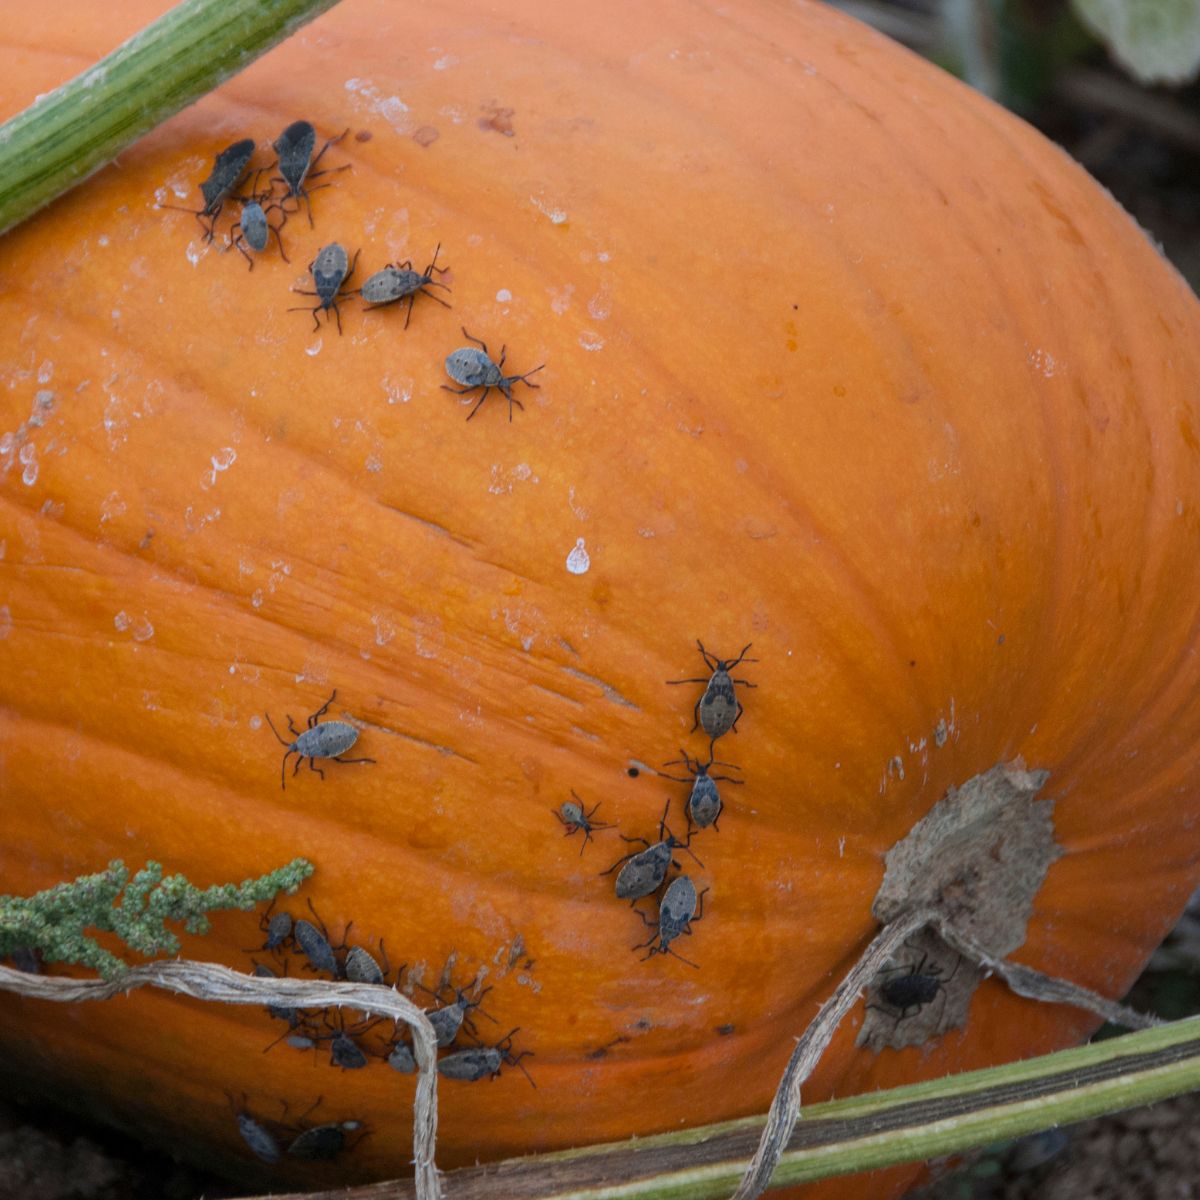 squash bug babies on a pumpkin